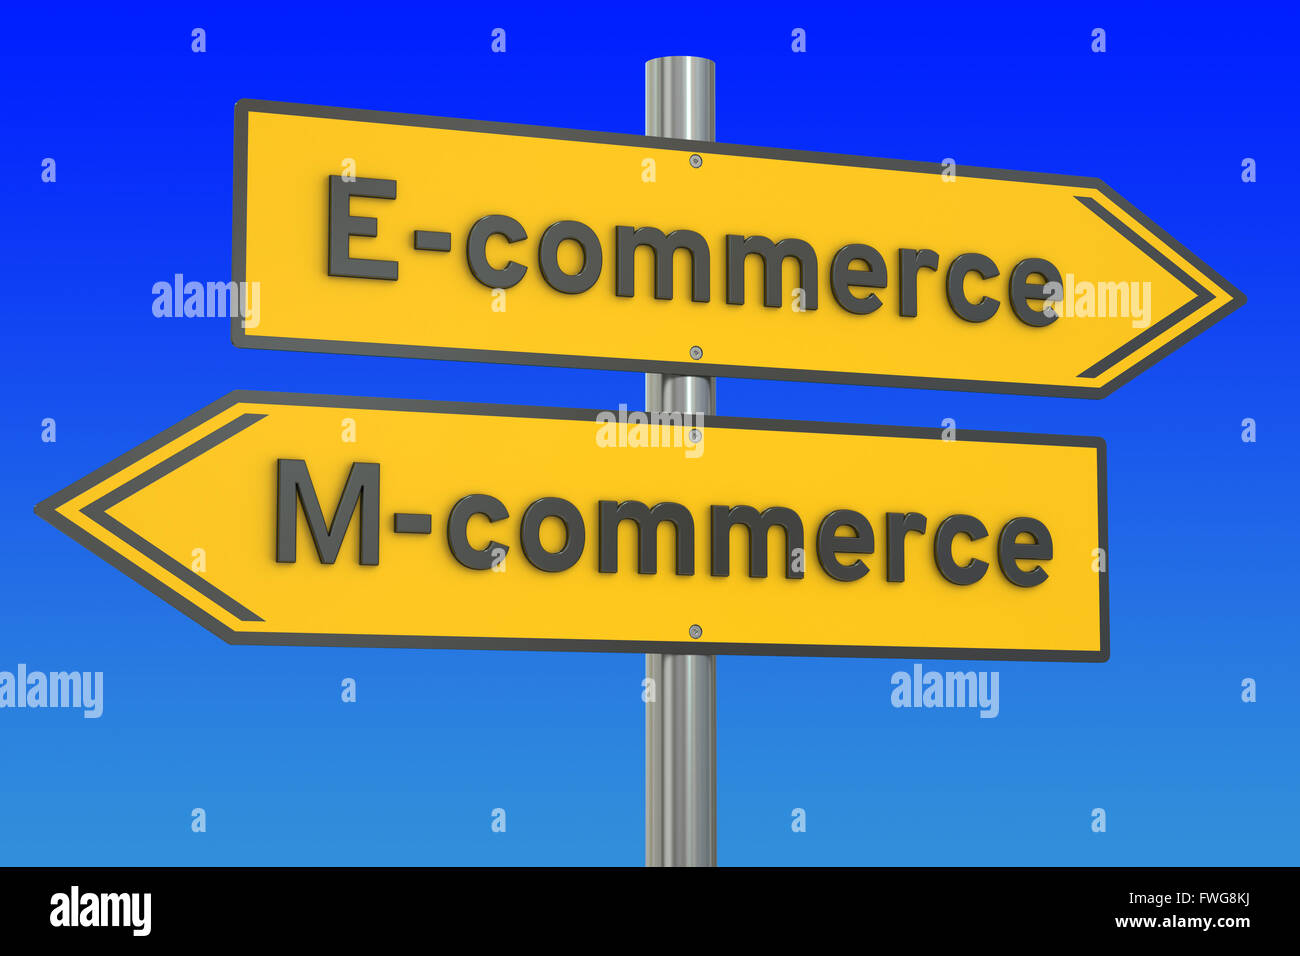 e-commerce or m-commerce concept, 3D rendering Stock Photo